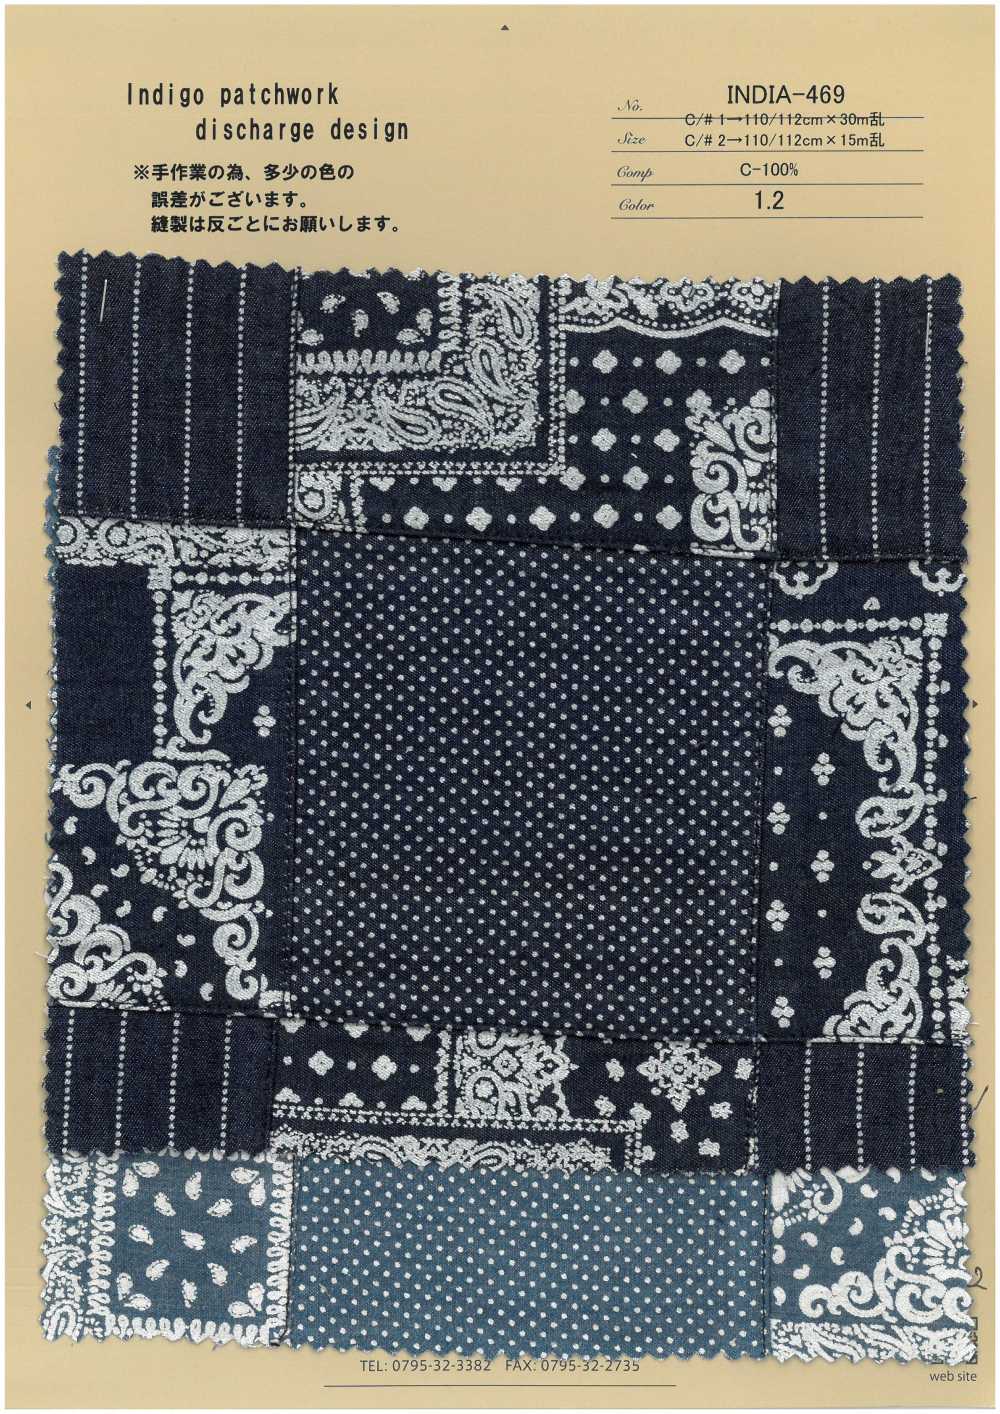 INDIA-469 Diseño De Descarga De Patchwork índigo[Fabrica Textil] ARINOBE CO., LTD.